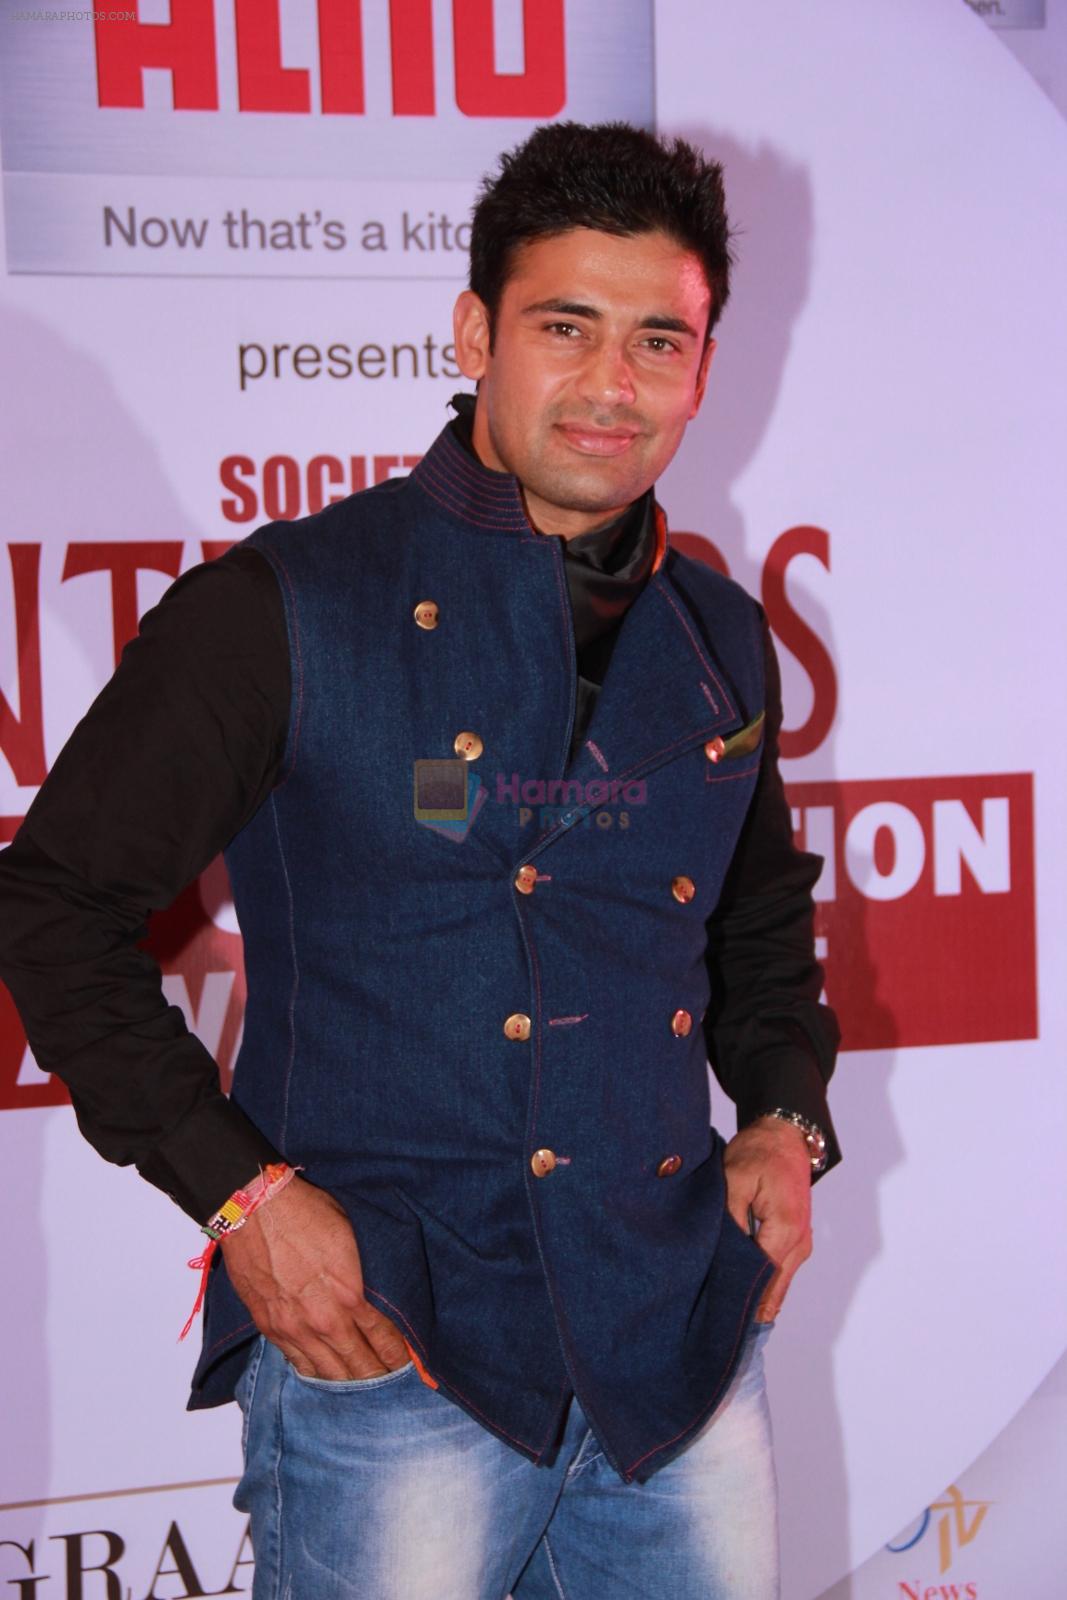 Sangram Singh at Socirty Interior Awards in Mumbai on 21st Feb 2015